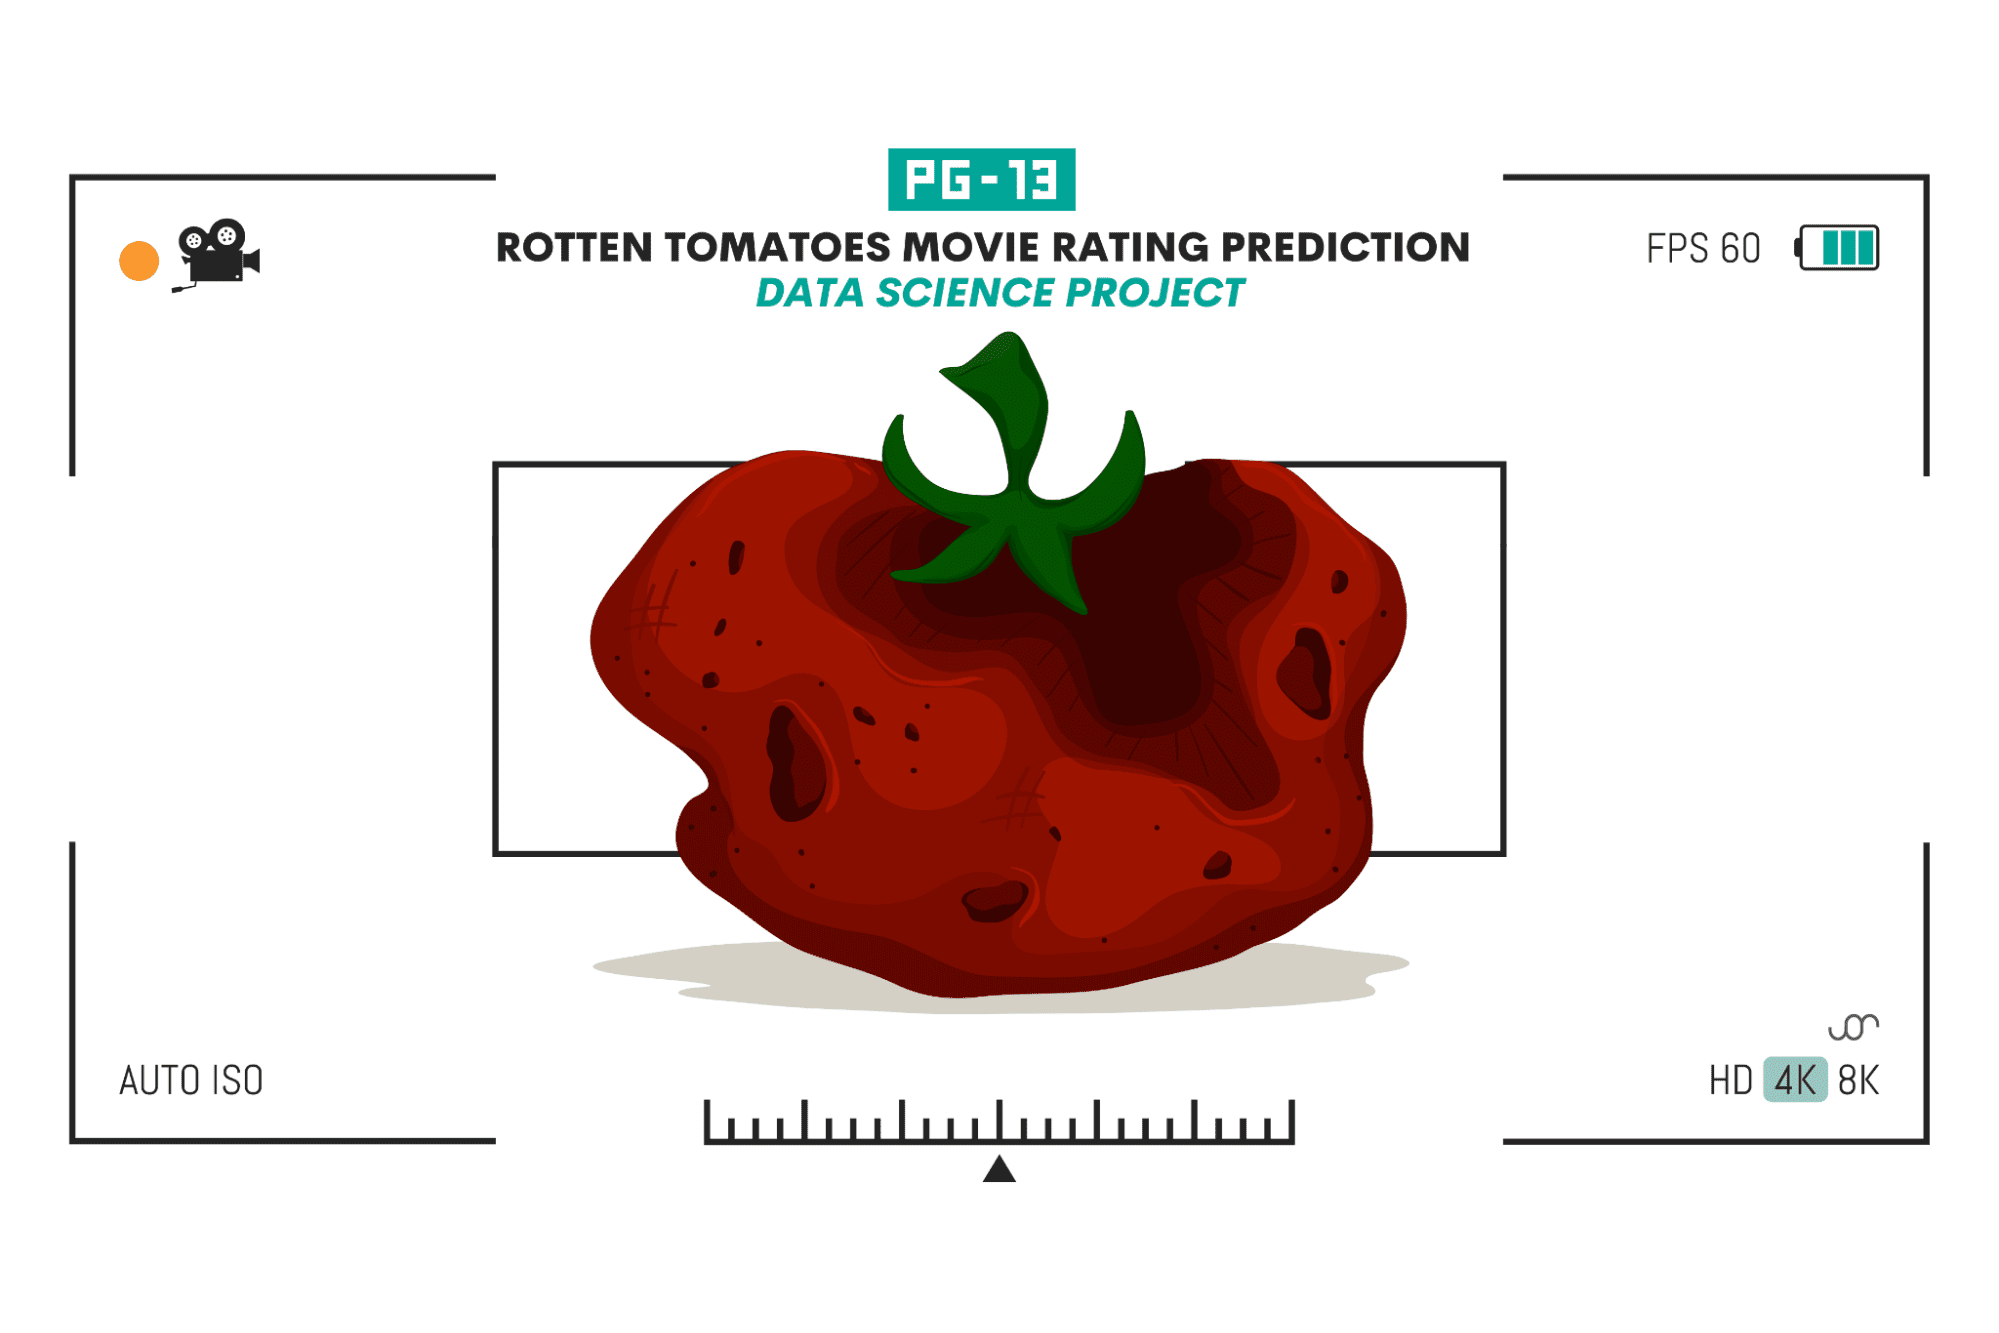 Point Break - Rotten Tomatoes